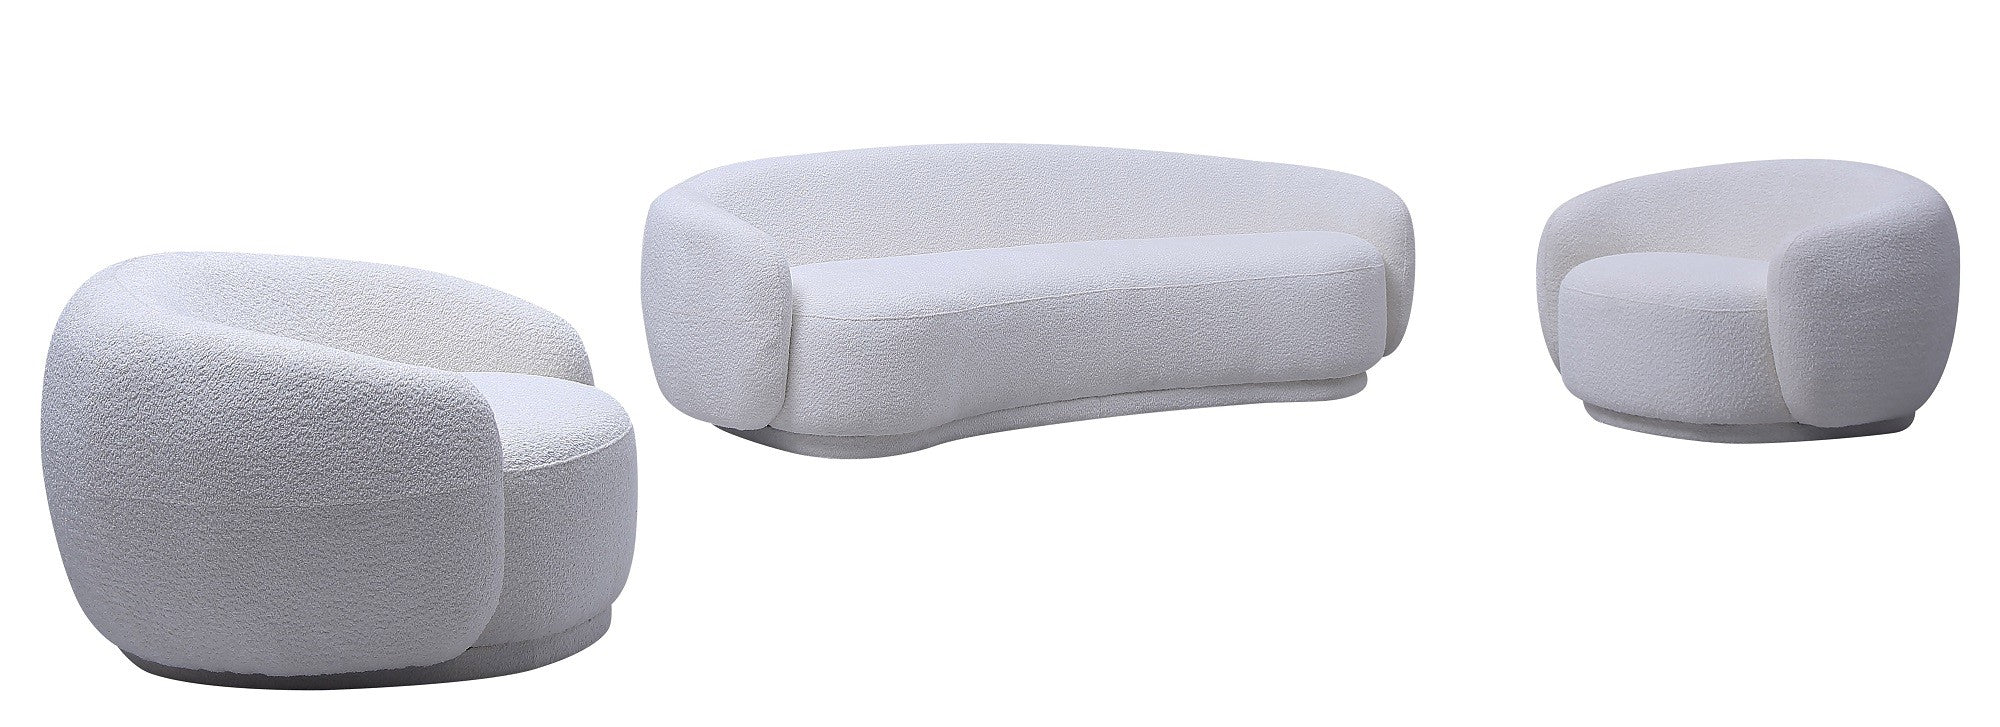 Lounge Off White Sofa & Chair